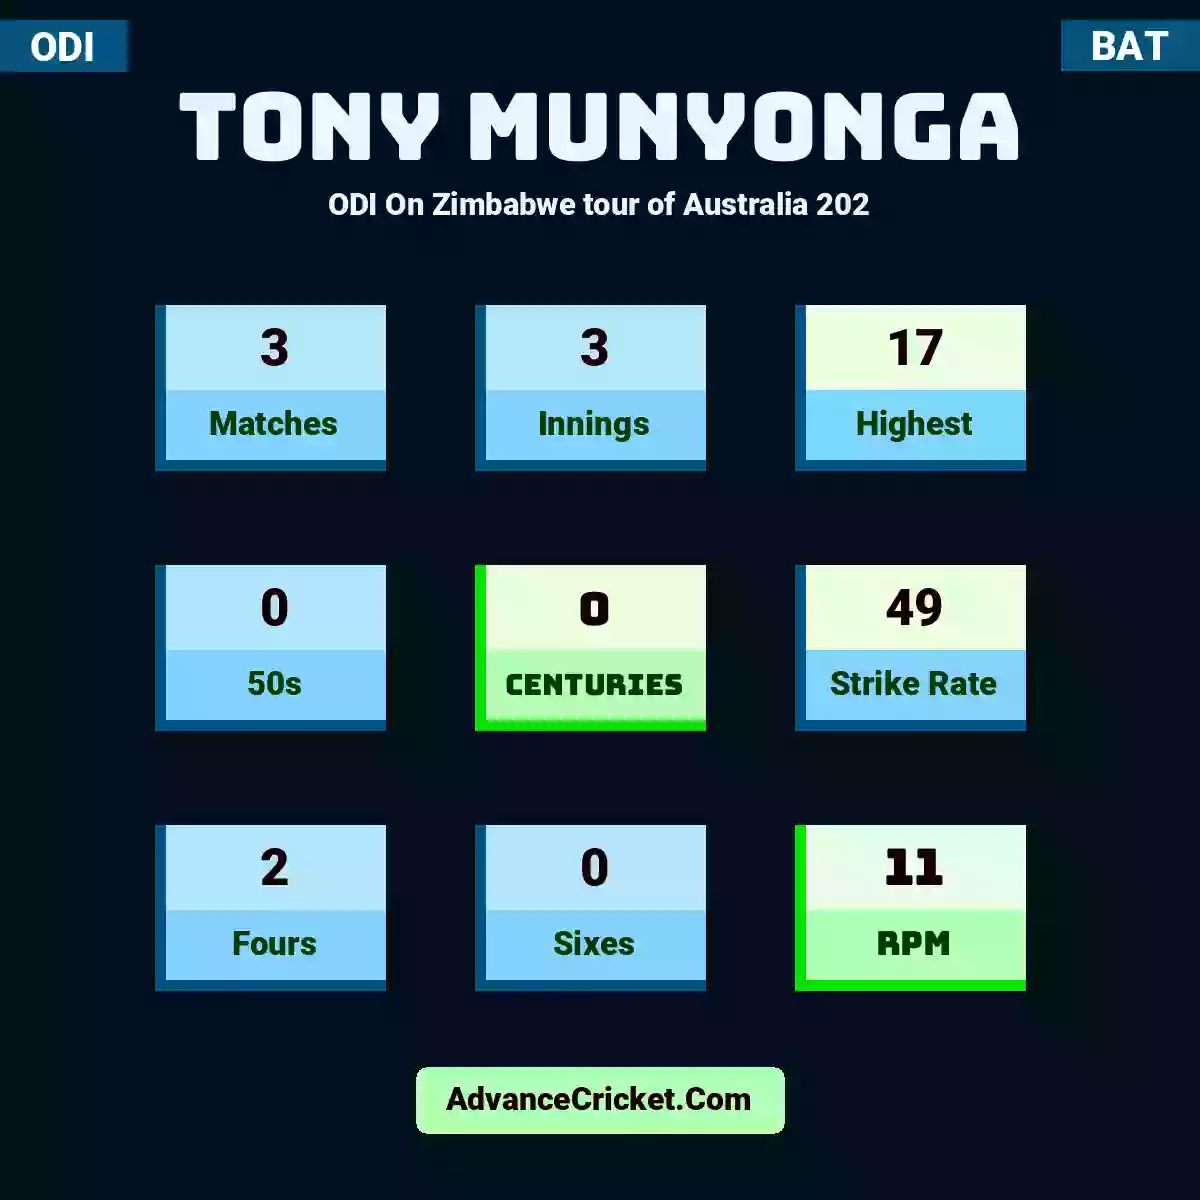 Tony Munyonga ODI  On Zimbabwe tour of Australia 202, Tony Munyonga played 3 matches, scored 17 runs as highest, 0 half-centuries, and 0 centuries, with a strike rate of 49. T.Munyonga hit 2 fours and 0 sixes, with an RPM of 11.